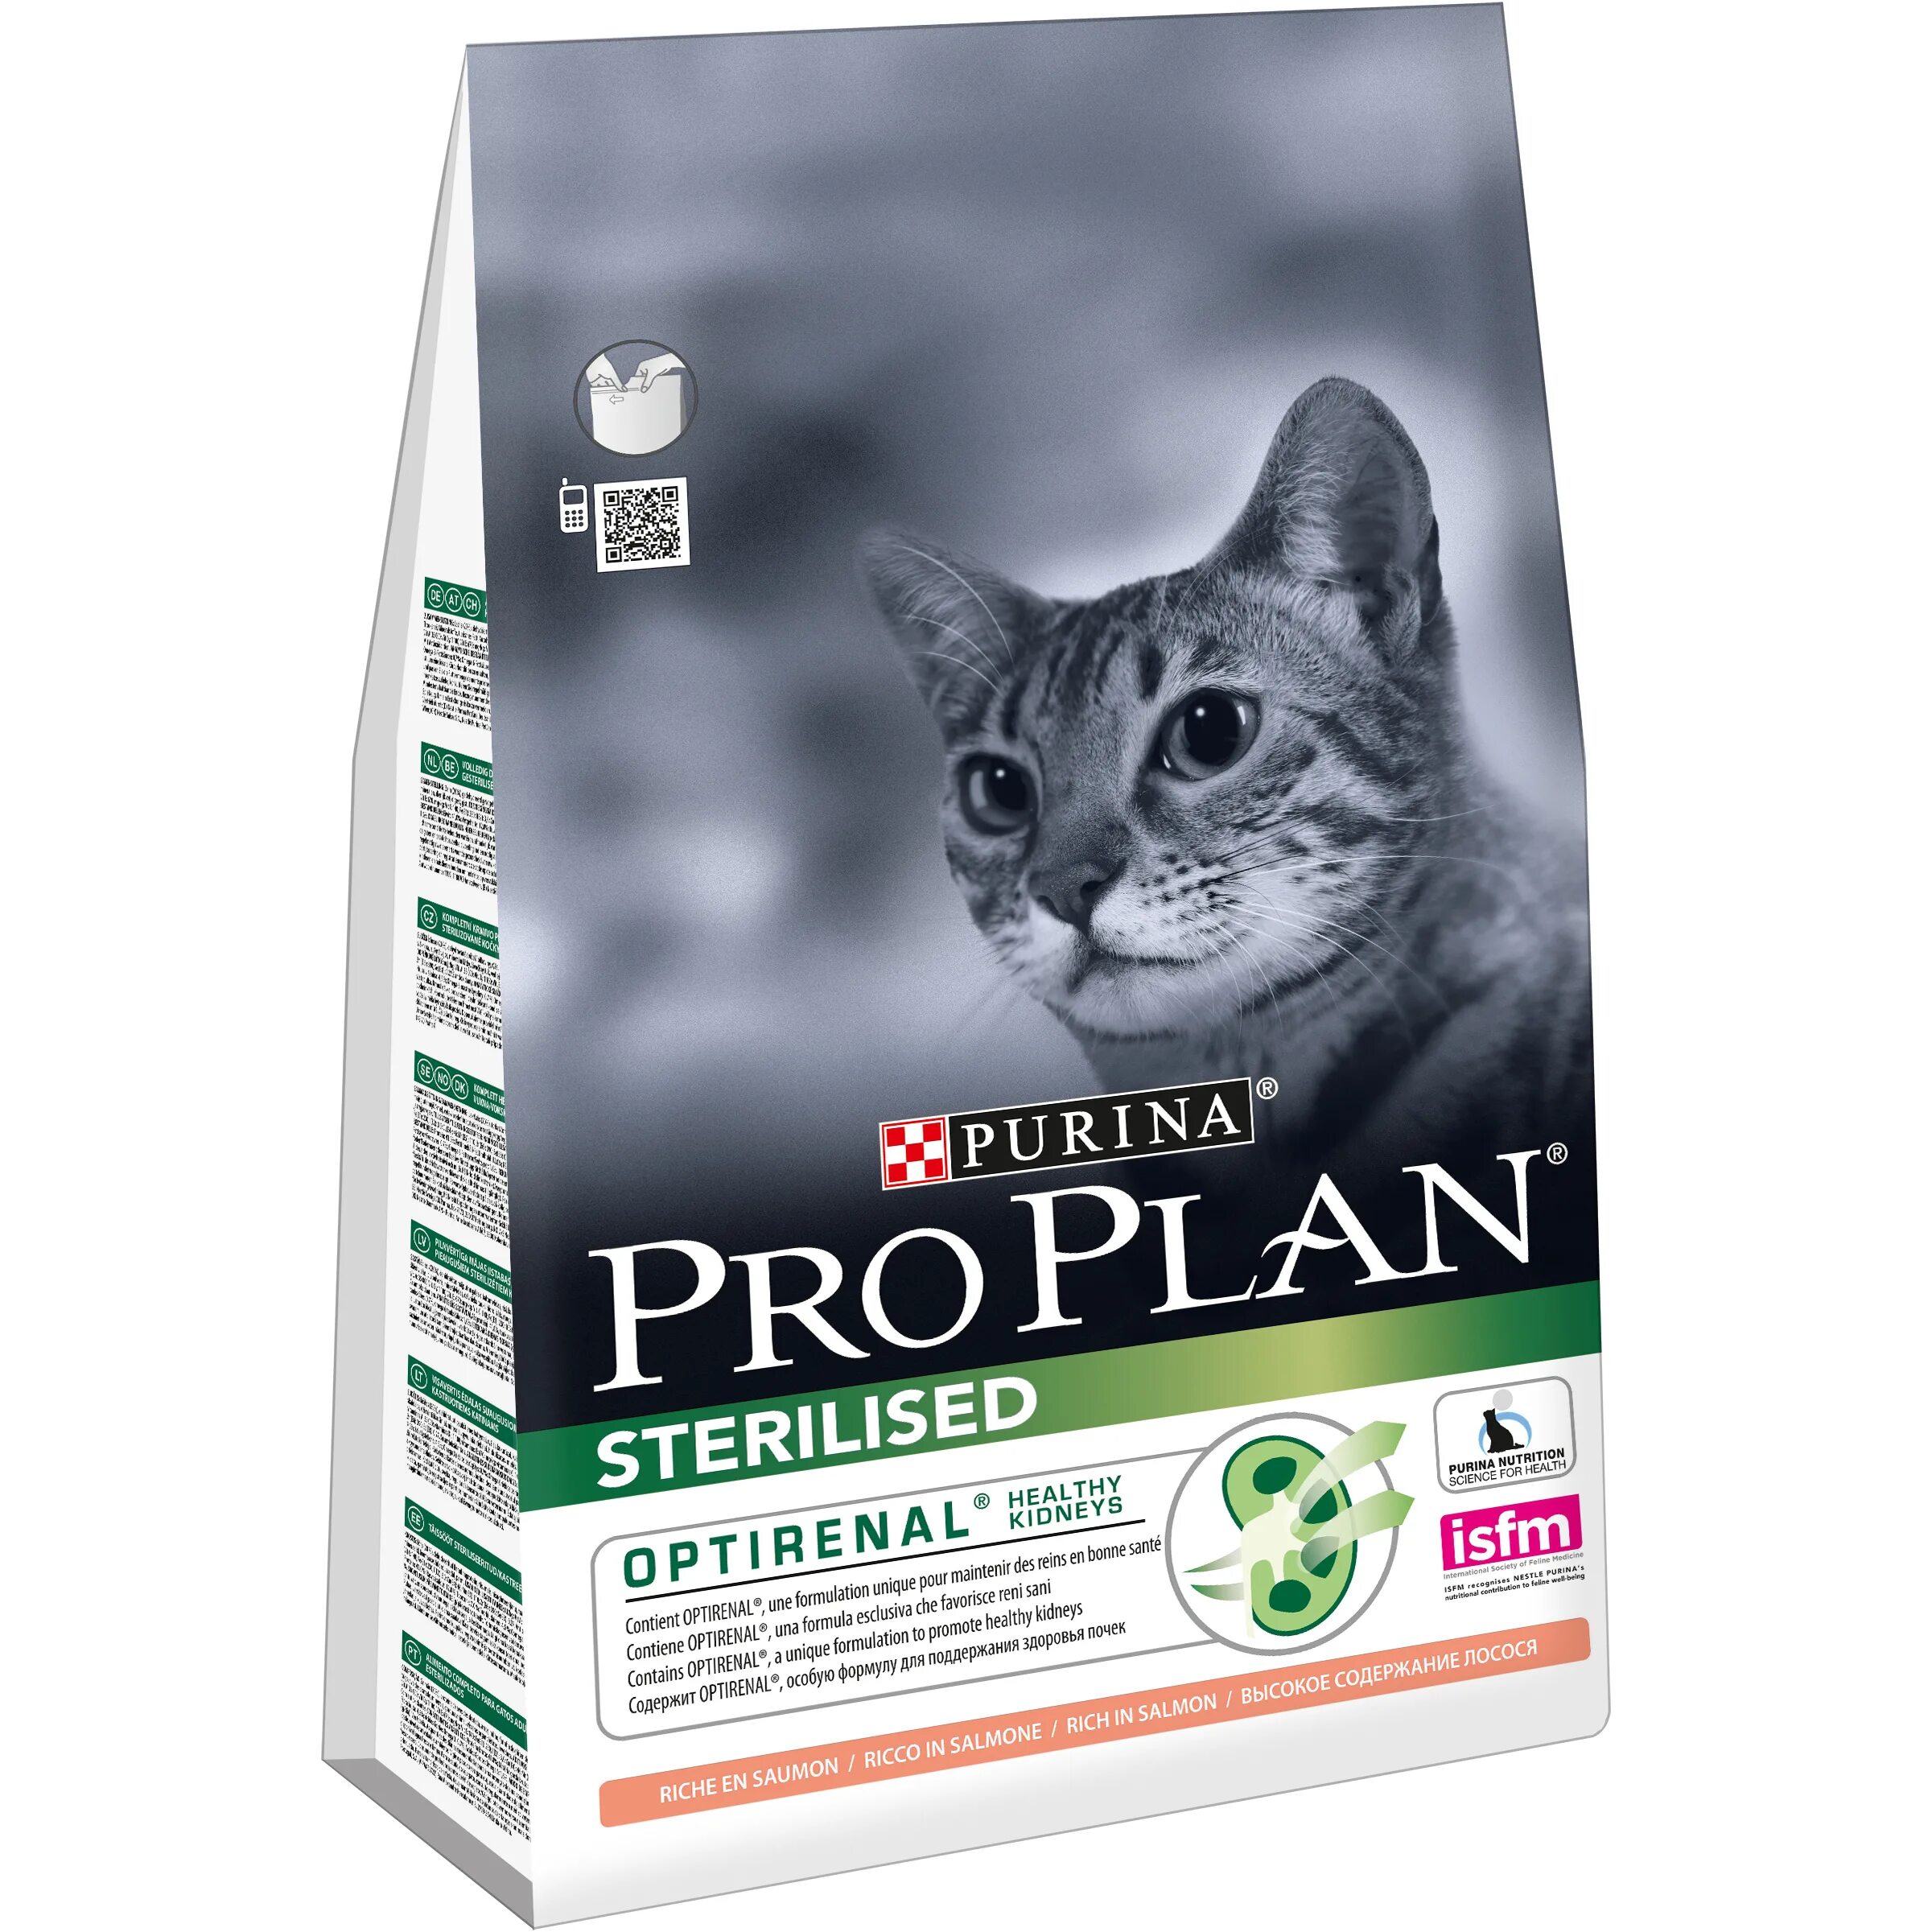 Pro plan elements для кошек. Пурина Проплан для стерилизованных кошек. Purina Pro Plan delicate для кошек. Purina Pro Plan Sterilised 7+. Пурина Проплан для стерилизованных кошек сухой.